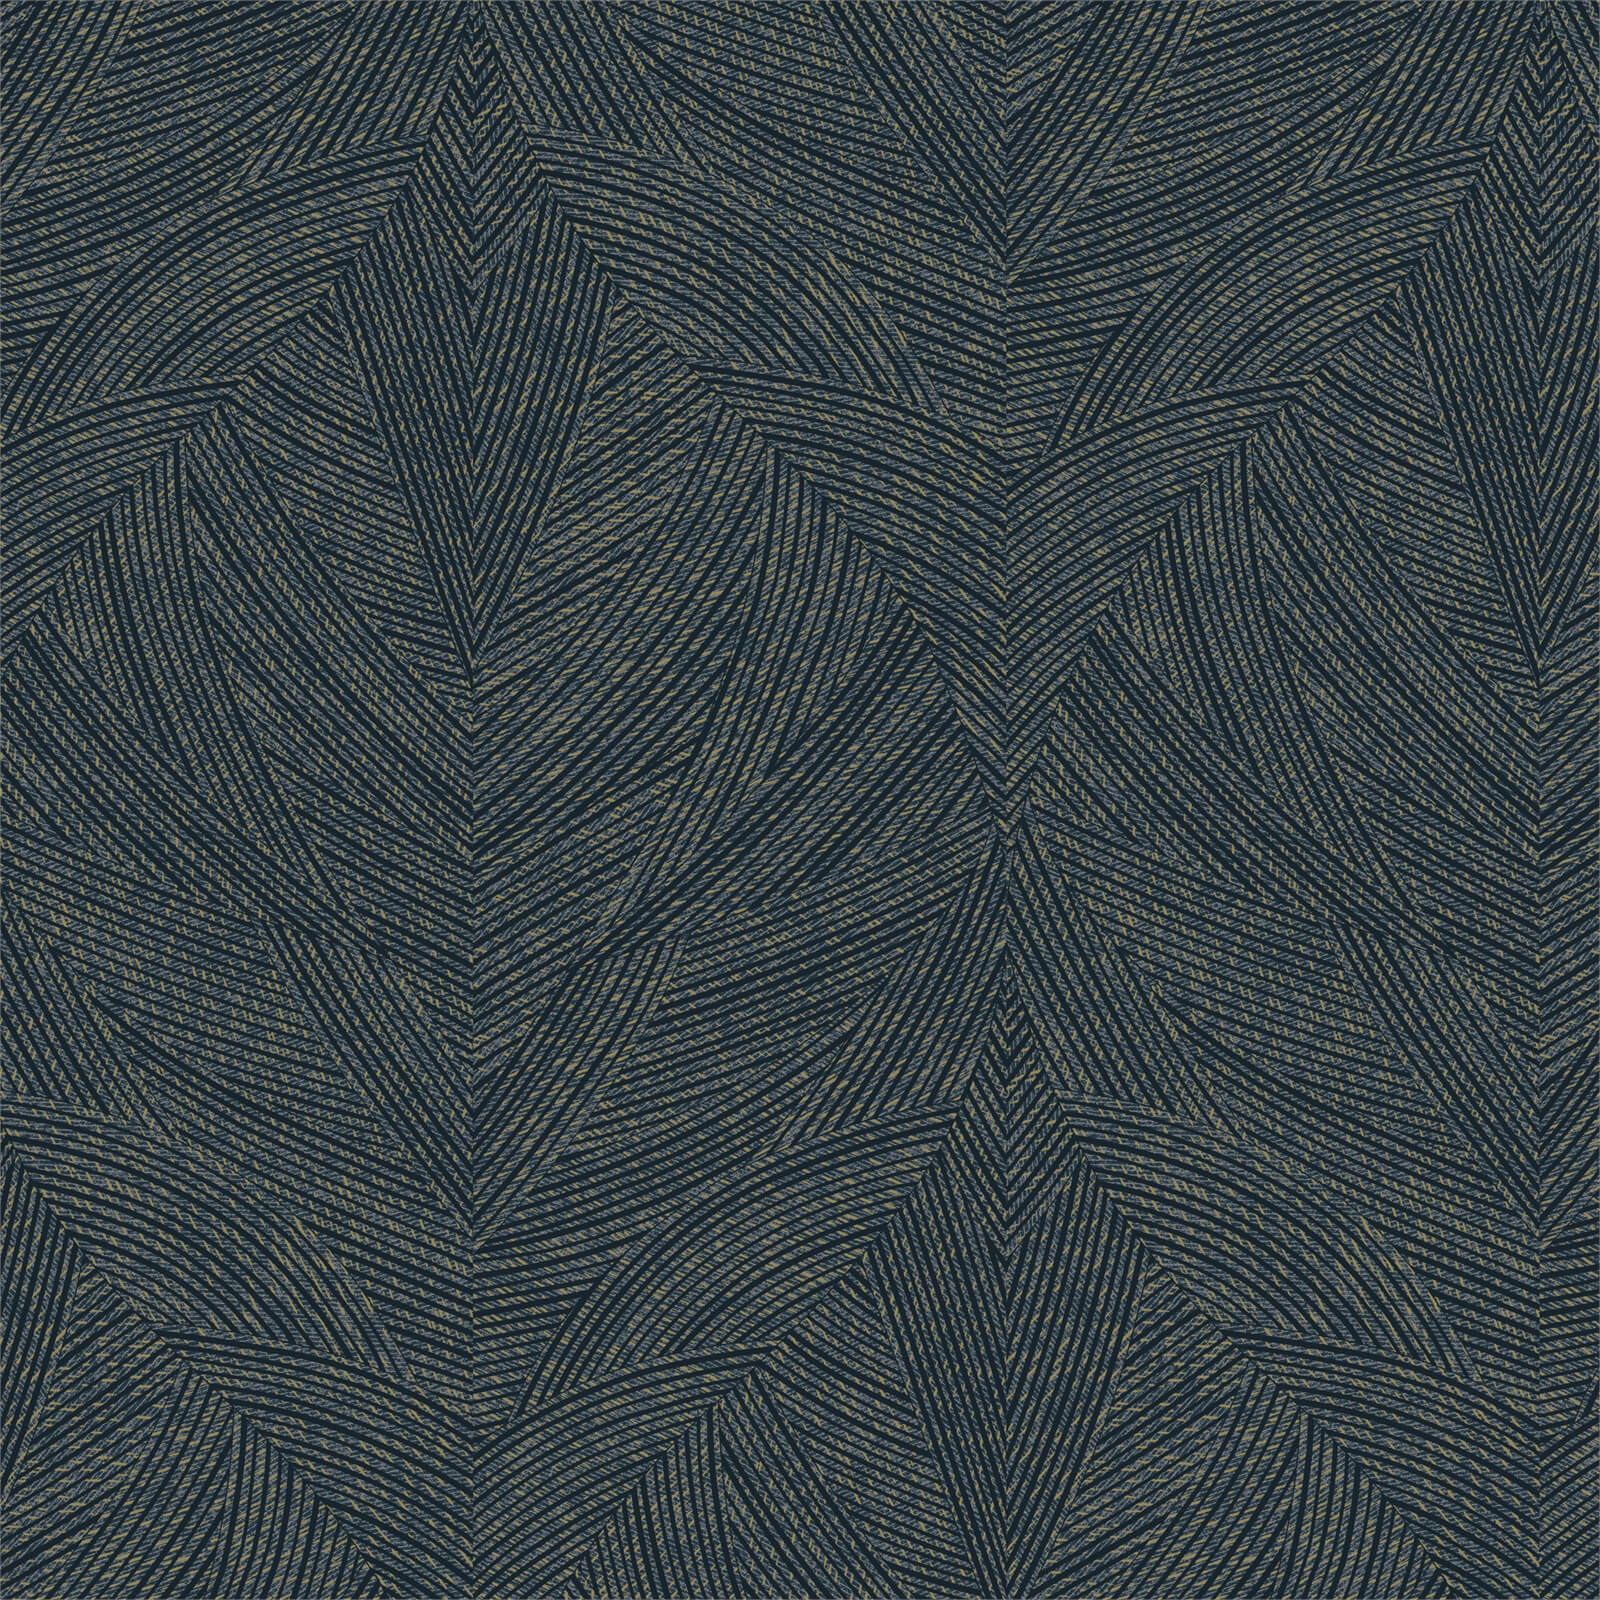 Holden Decor Toluca Geometric Textured Metallic Navy Wallpaper